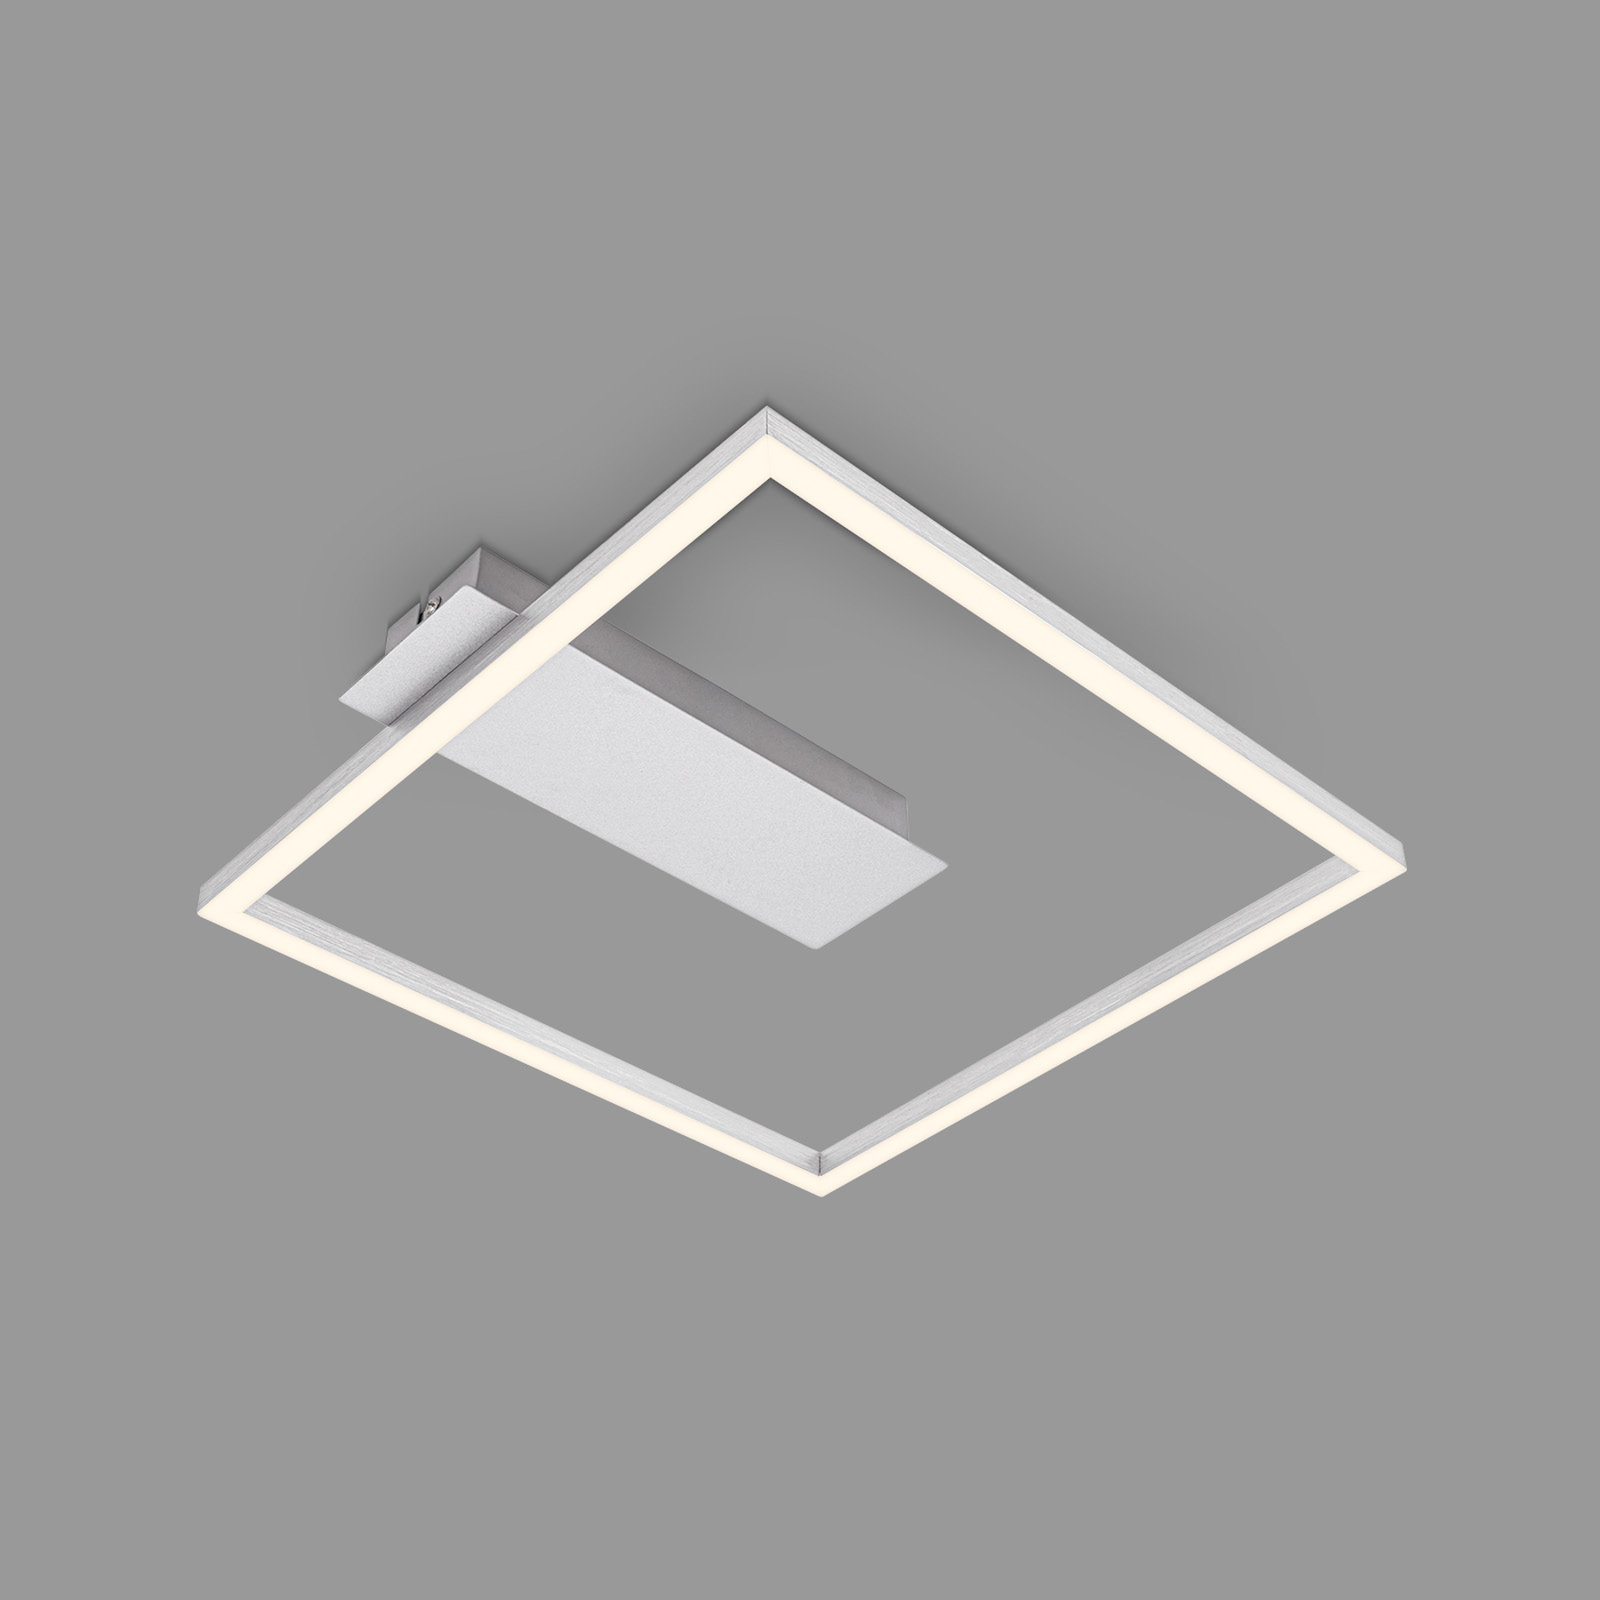 3771 LED ceiling light in a frame shape aluminium